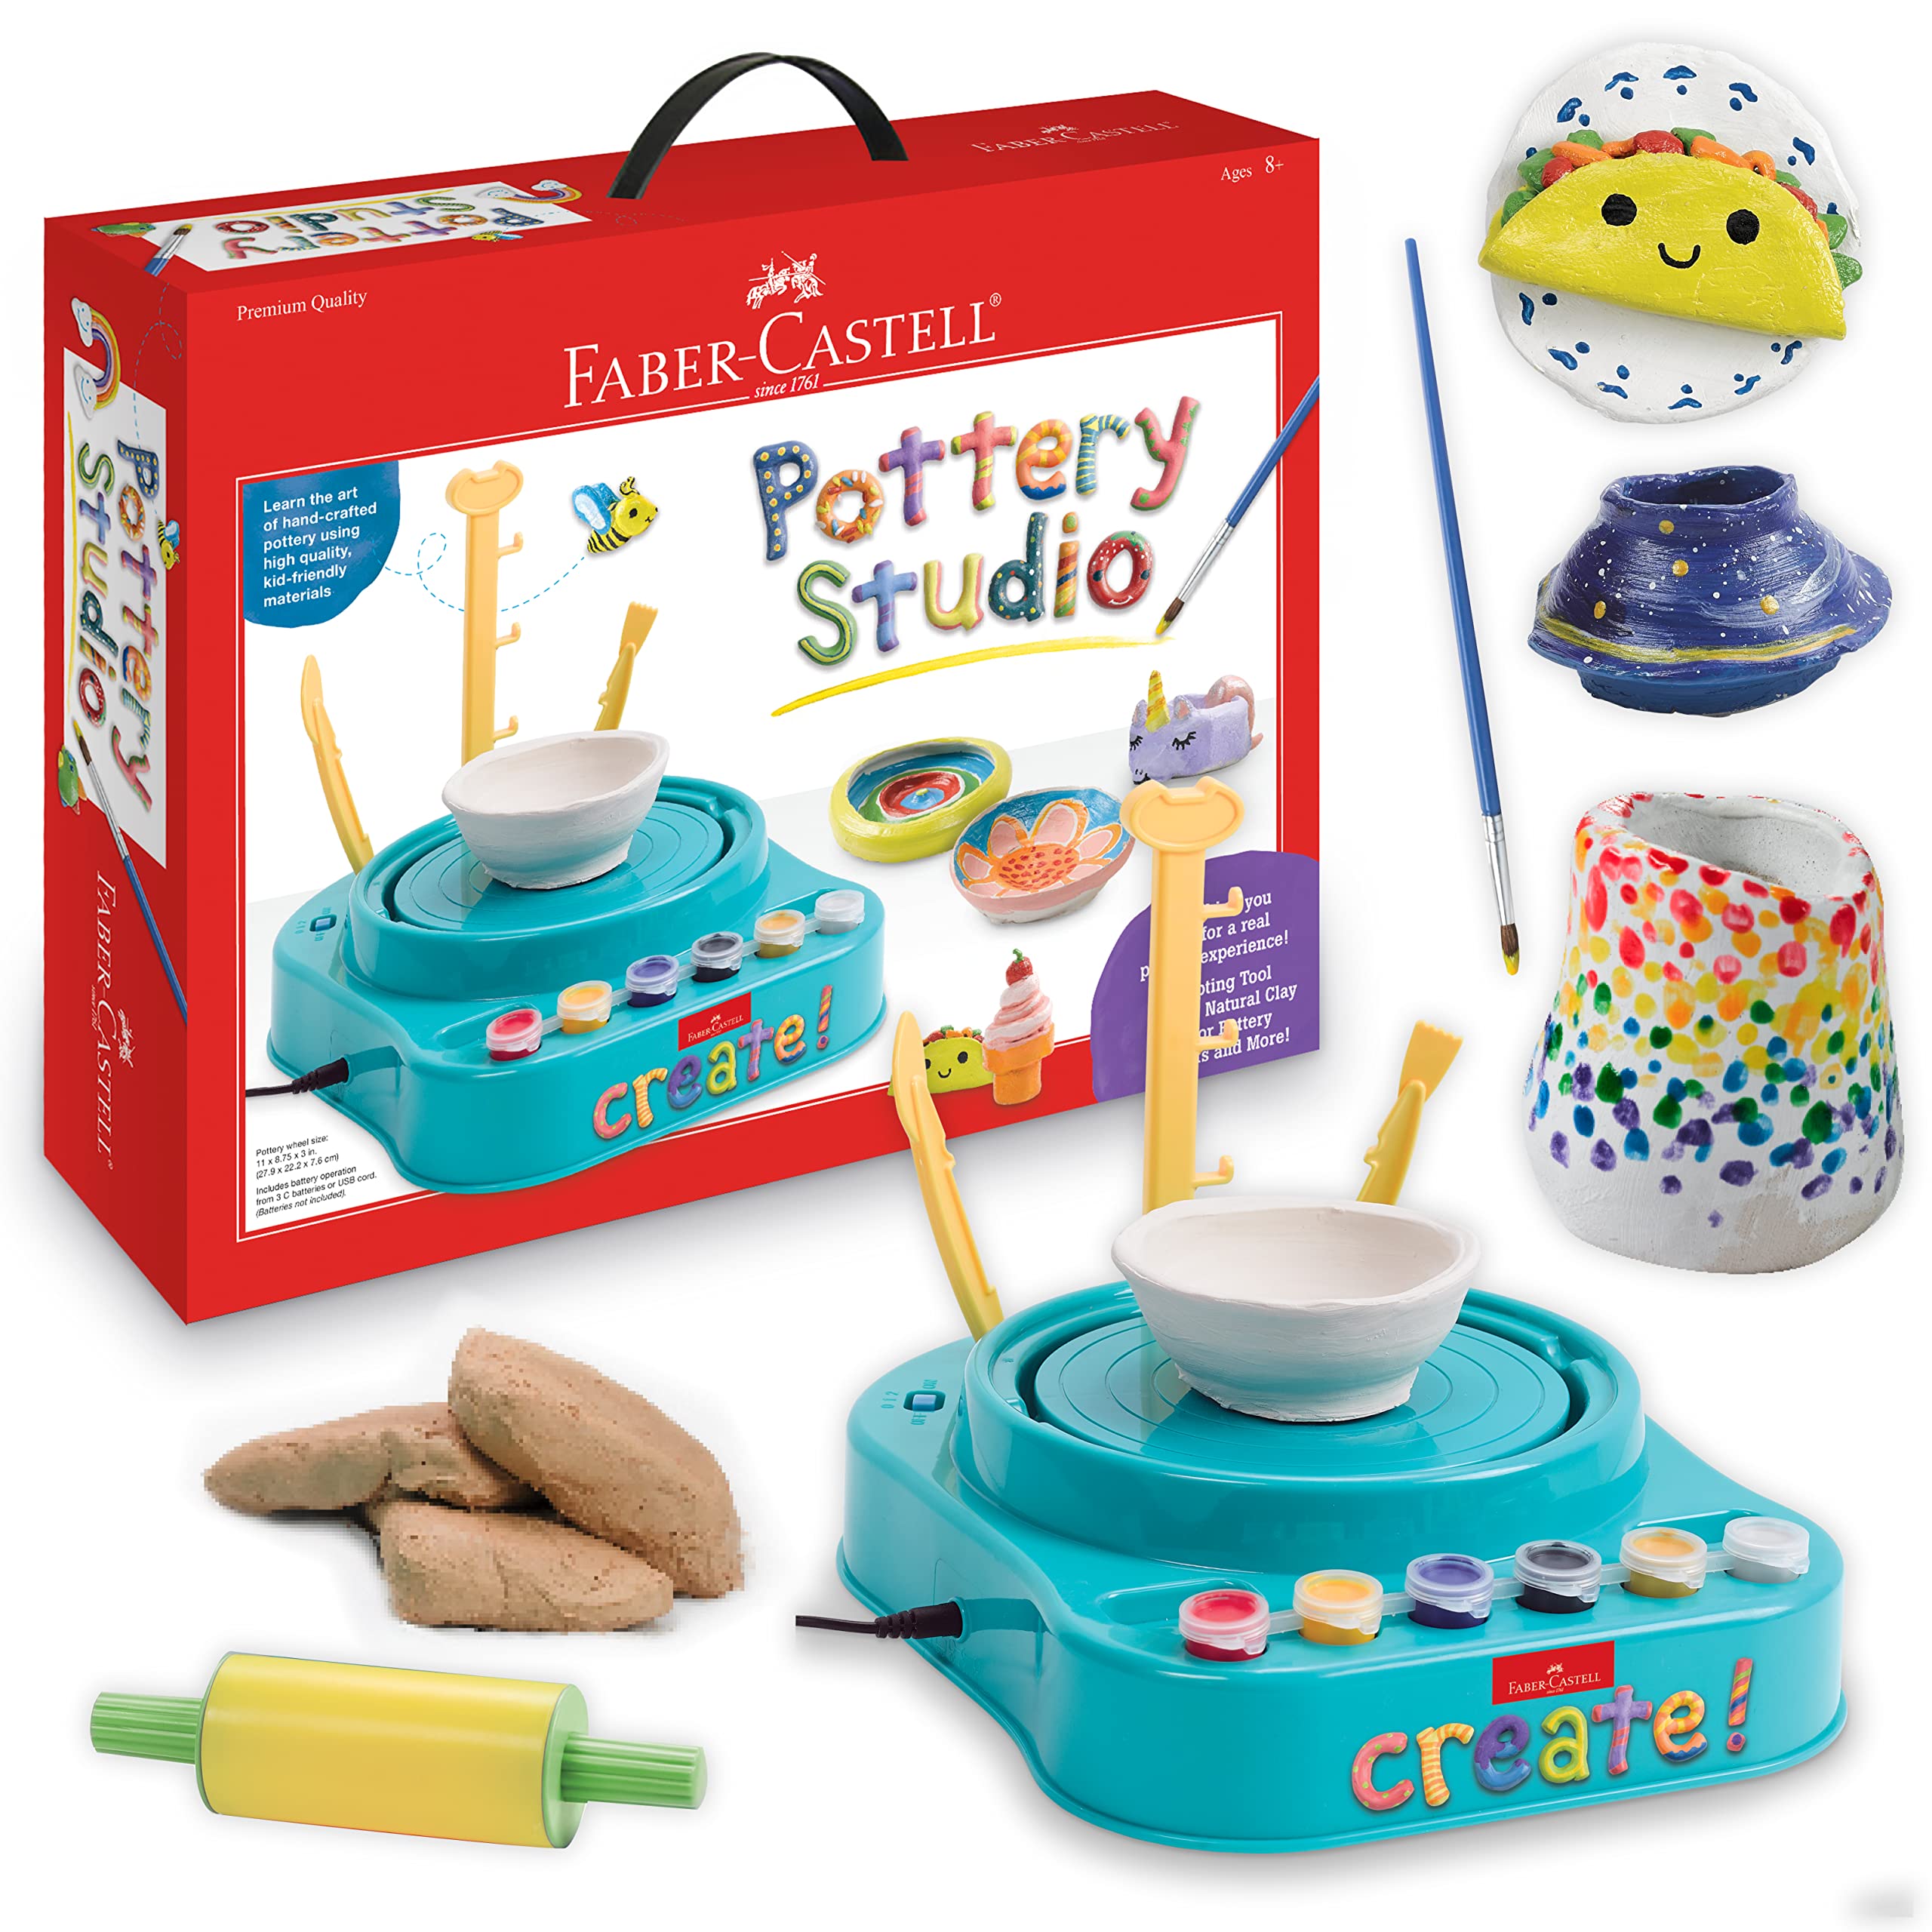 Pottery wheel for Kids (2020)  Cheap pottery Wheel Kit I Kids Pottery  Wheel 